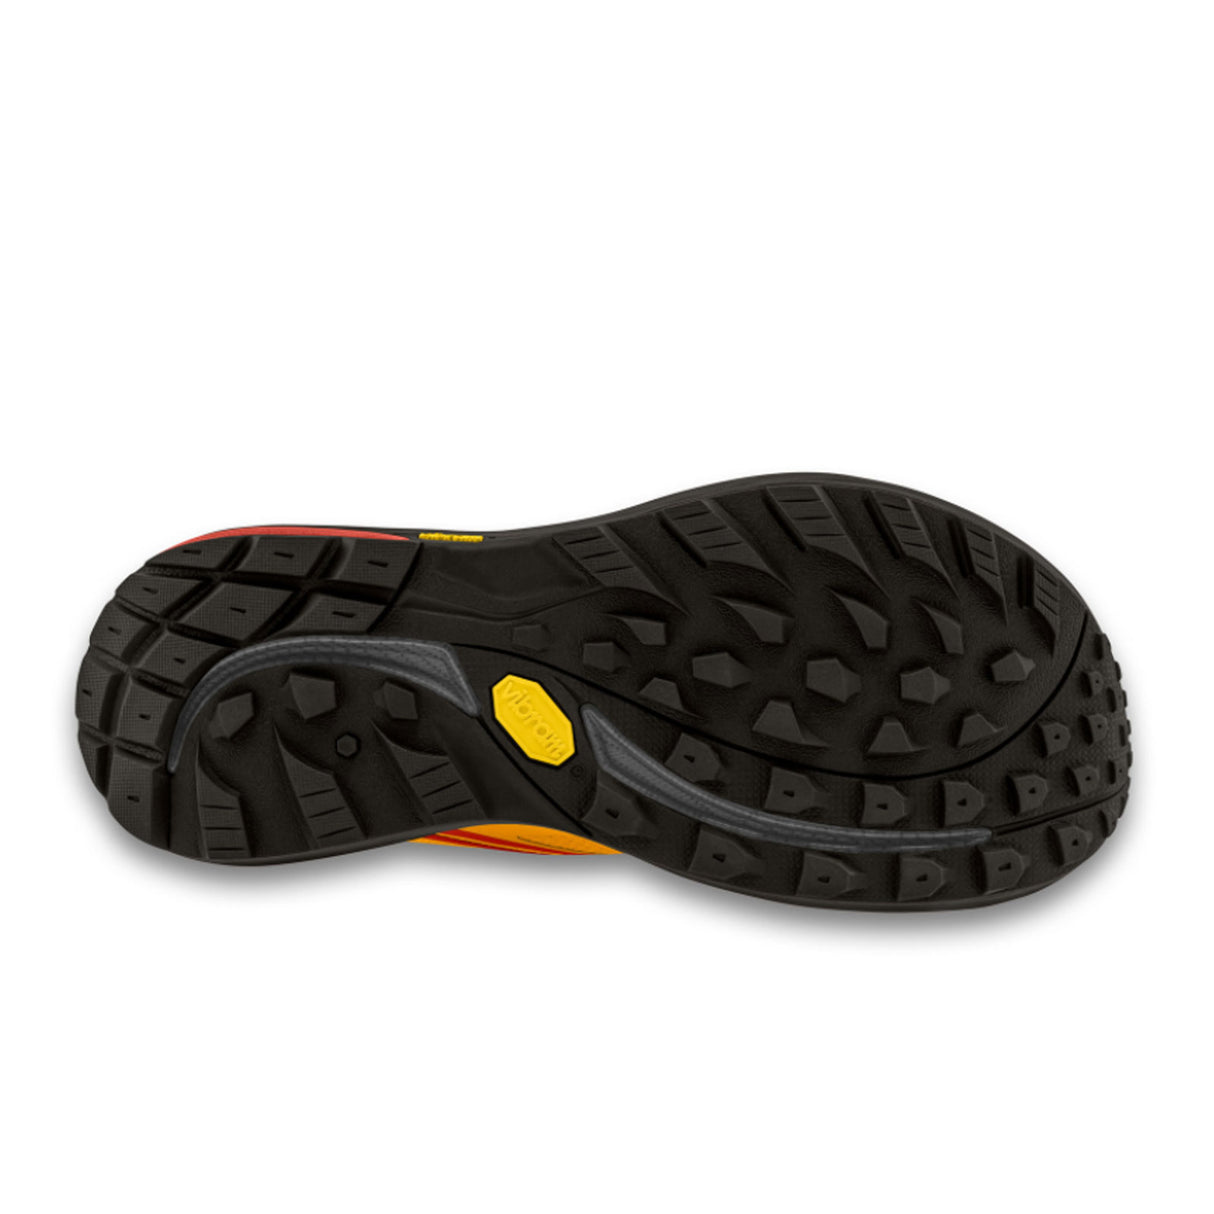 Topo Trailventure 2 Waterproof Hiking Boot (Men) - Mango/Black Boots - Hiking - Mid - The Heel Shoe Fitters